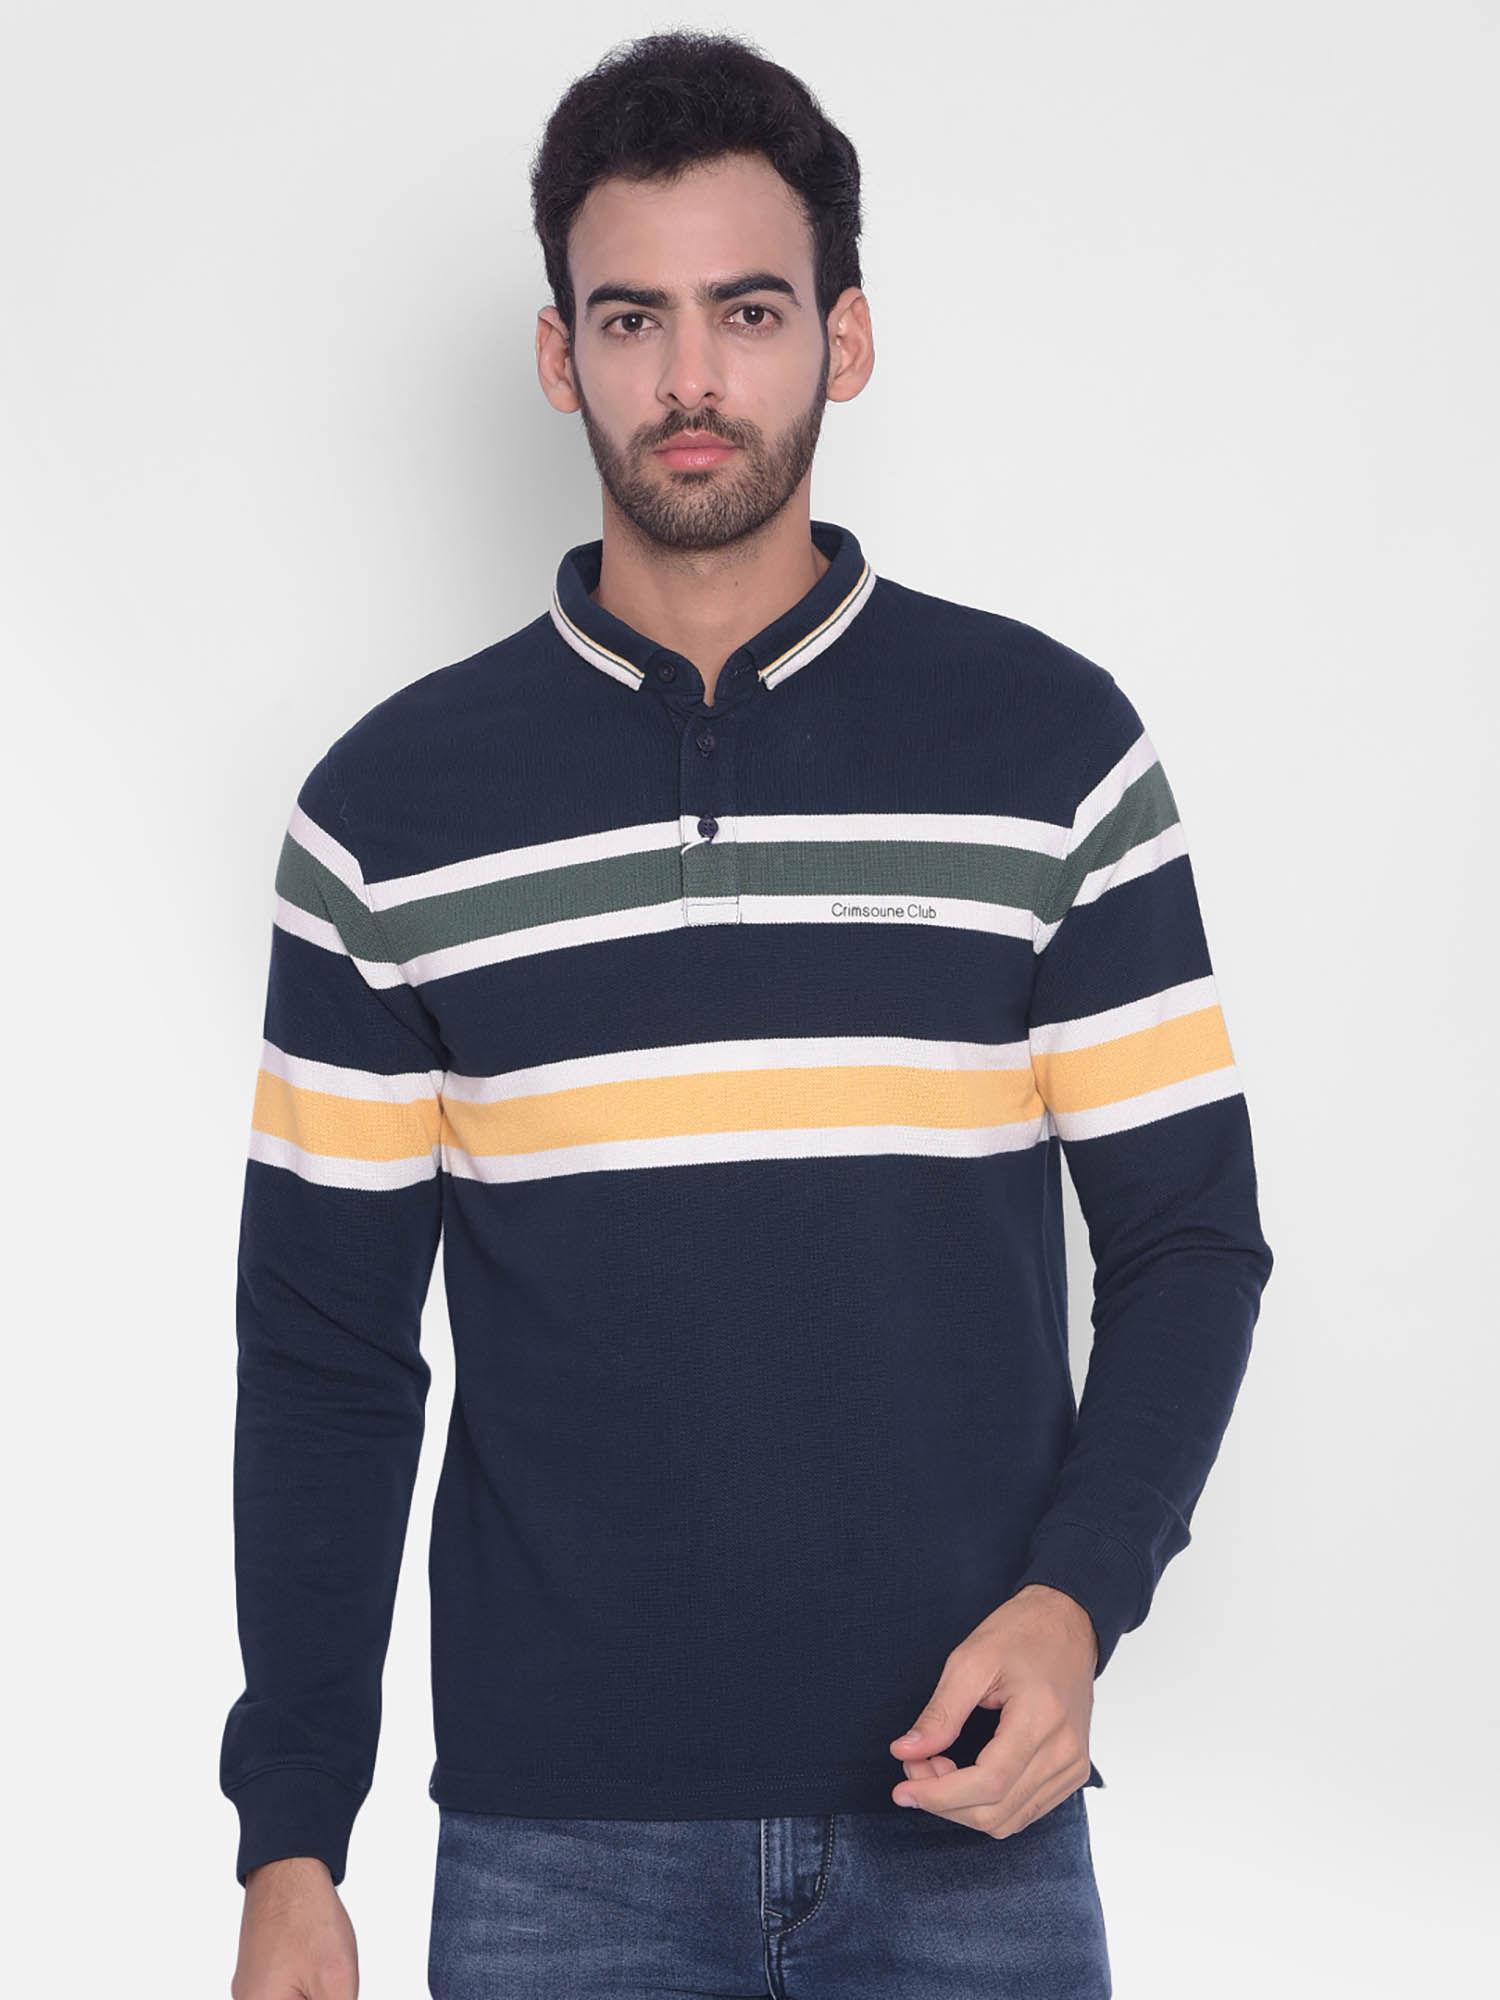 mens navy blue striped polo t-shirt